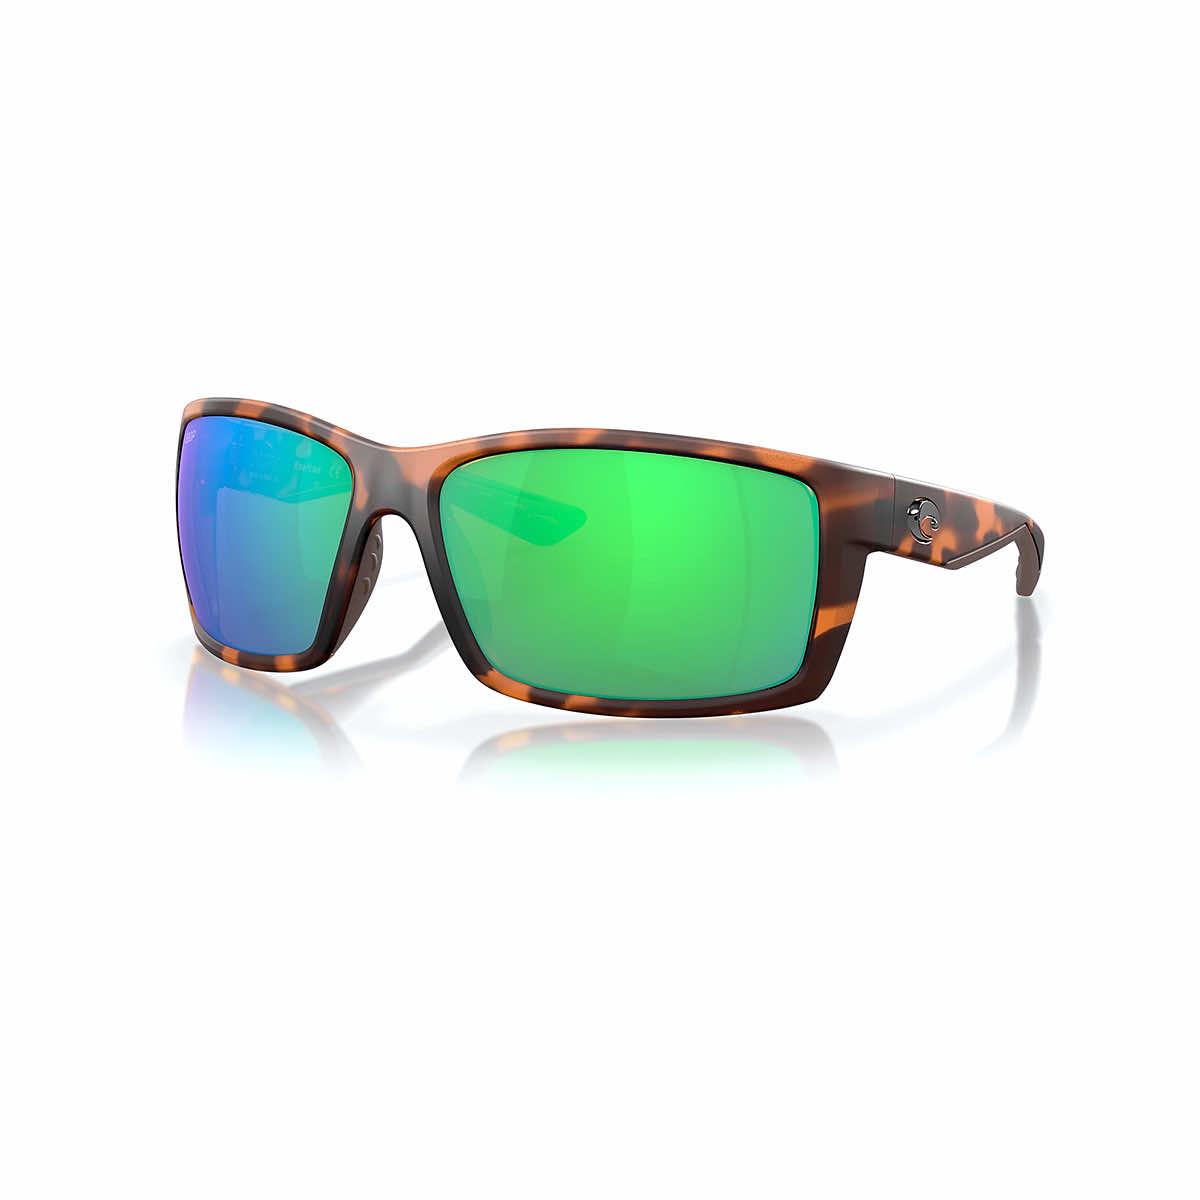  Reefton 580g Sunglasses - Polarized Glass